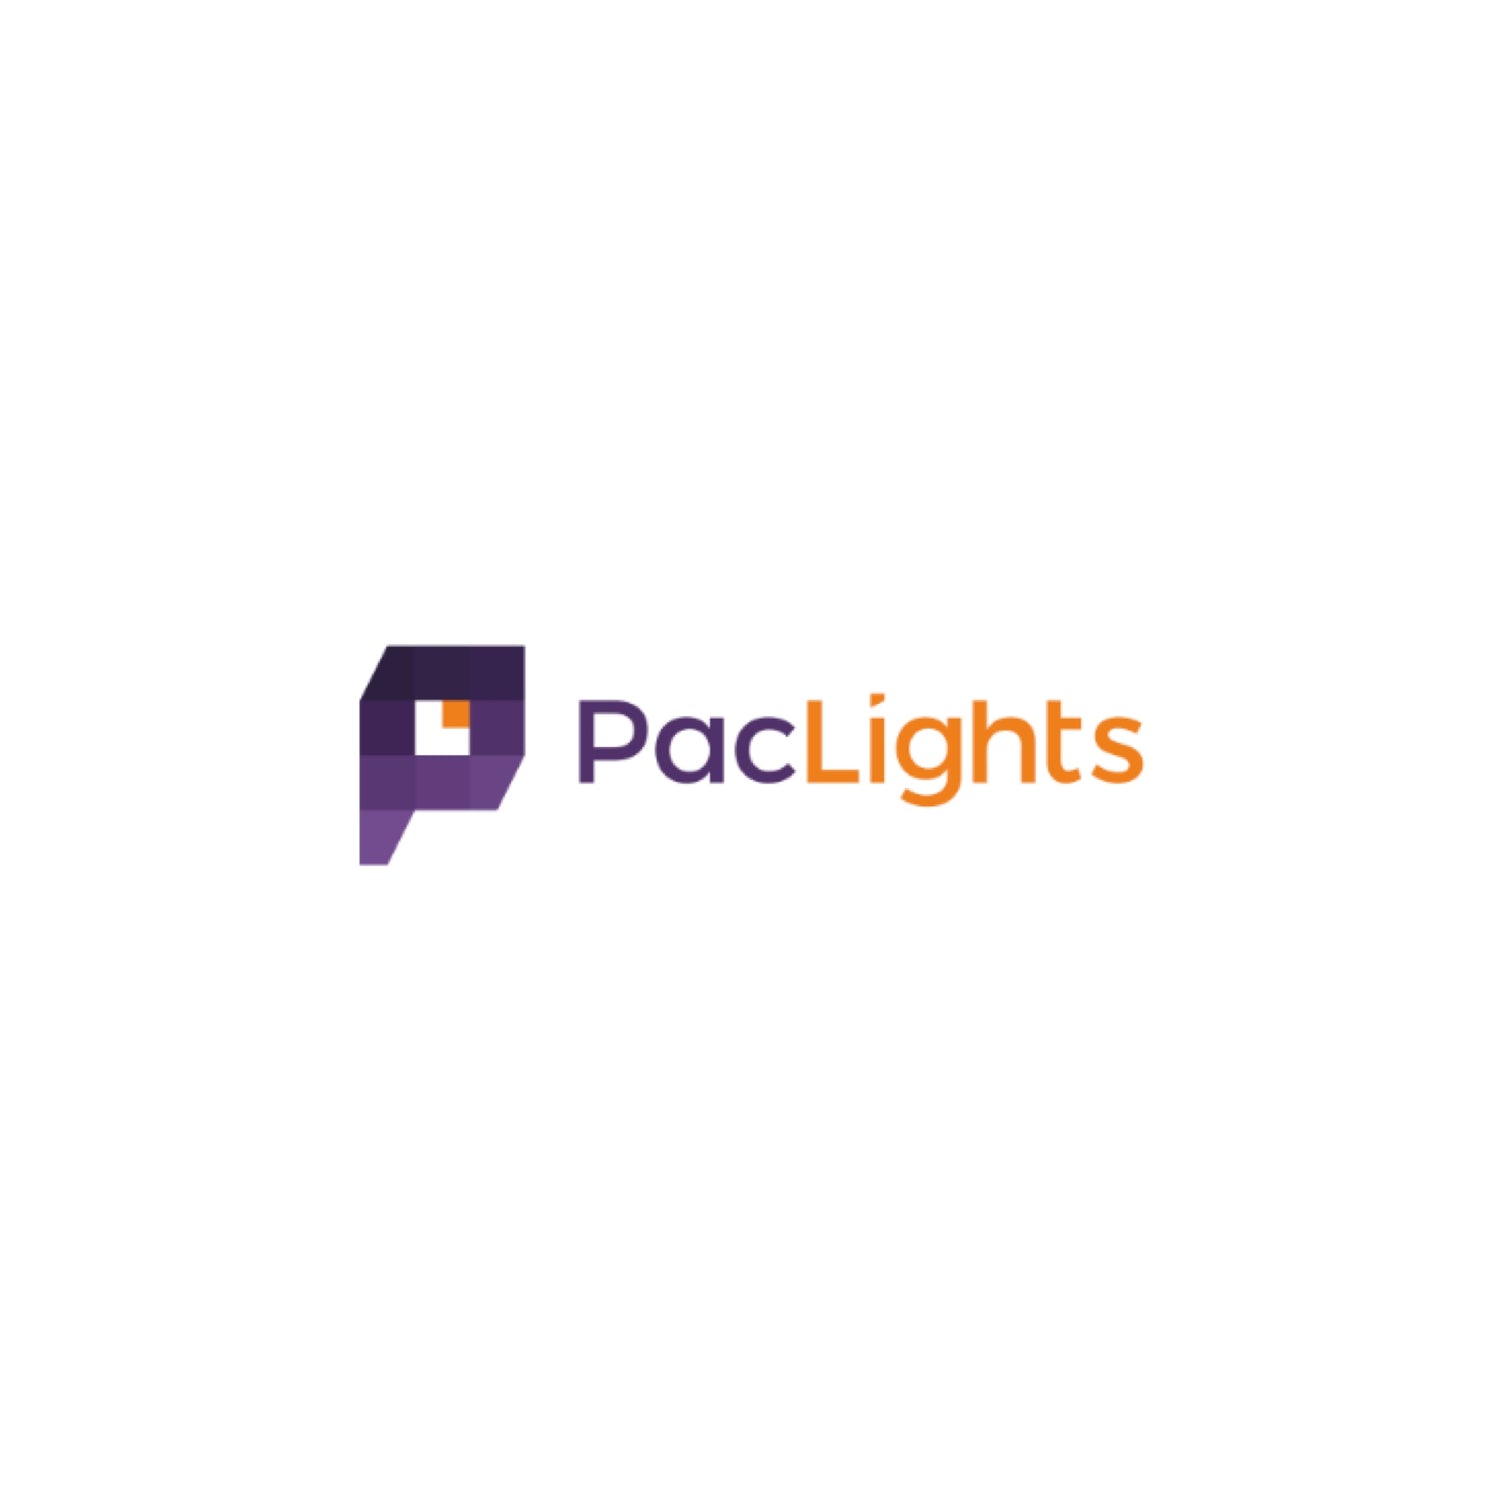 PACLIGHTS LLC